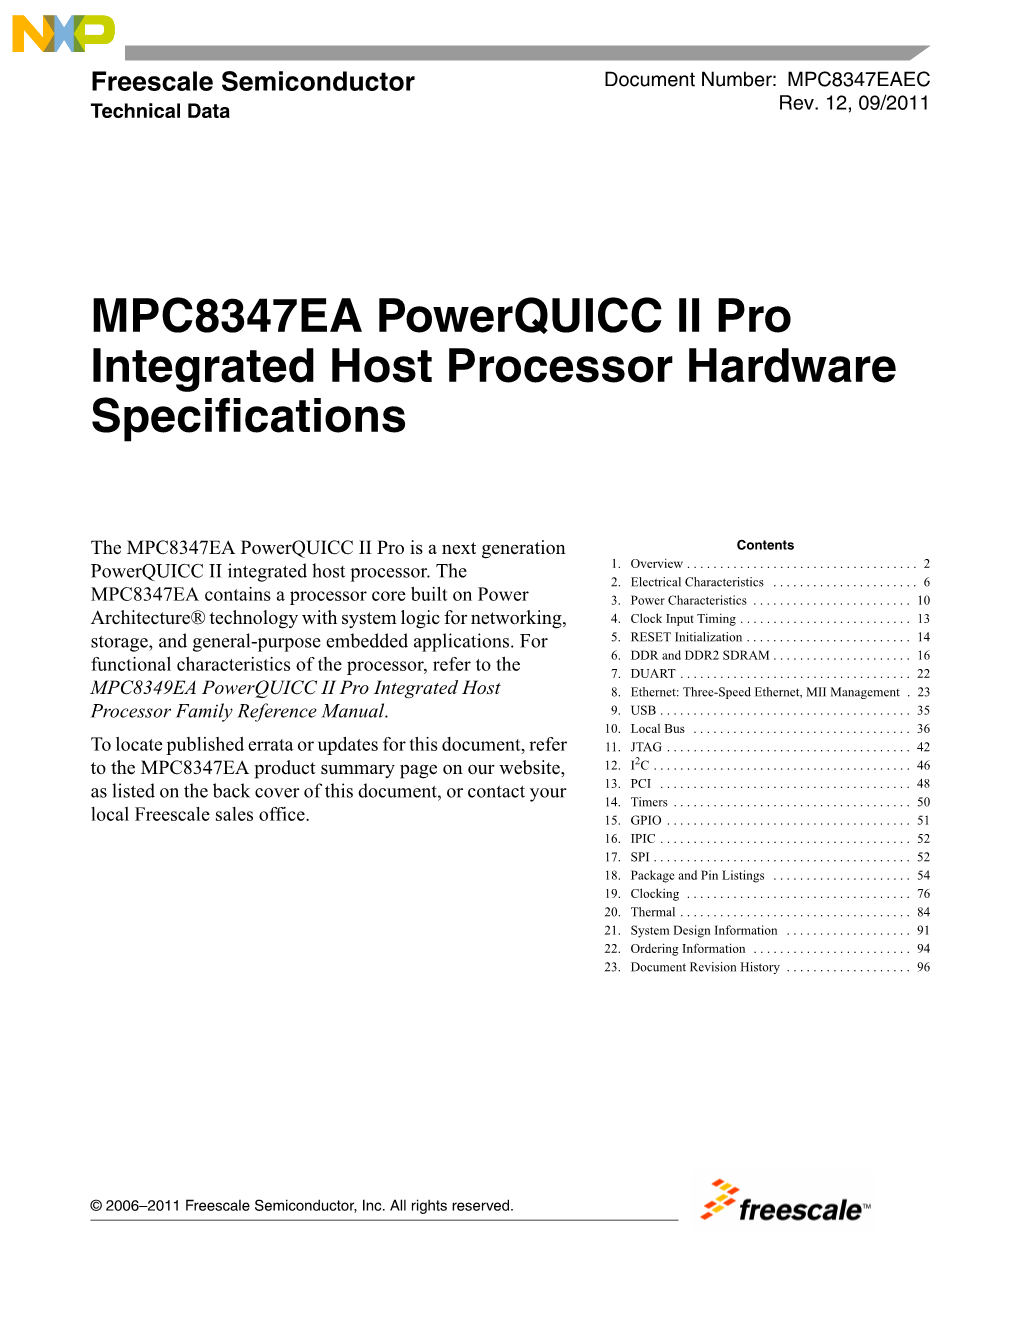 MPC8347EA Powerquicc II Pro Integrated Host Processor Hardware Specifications